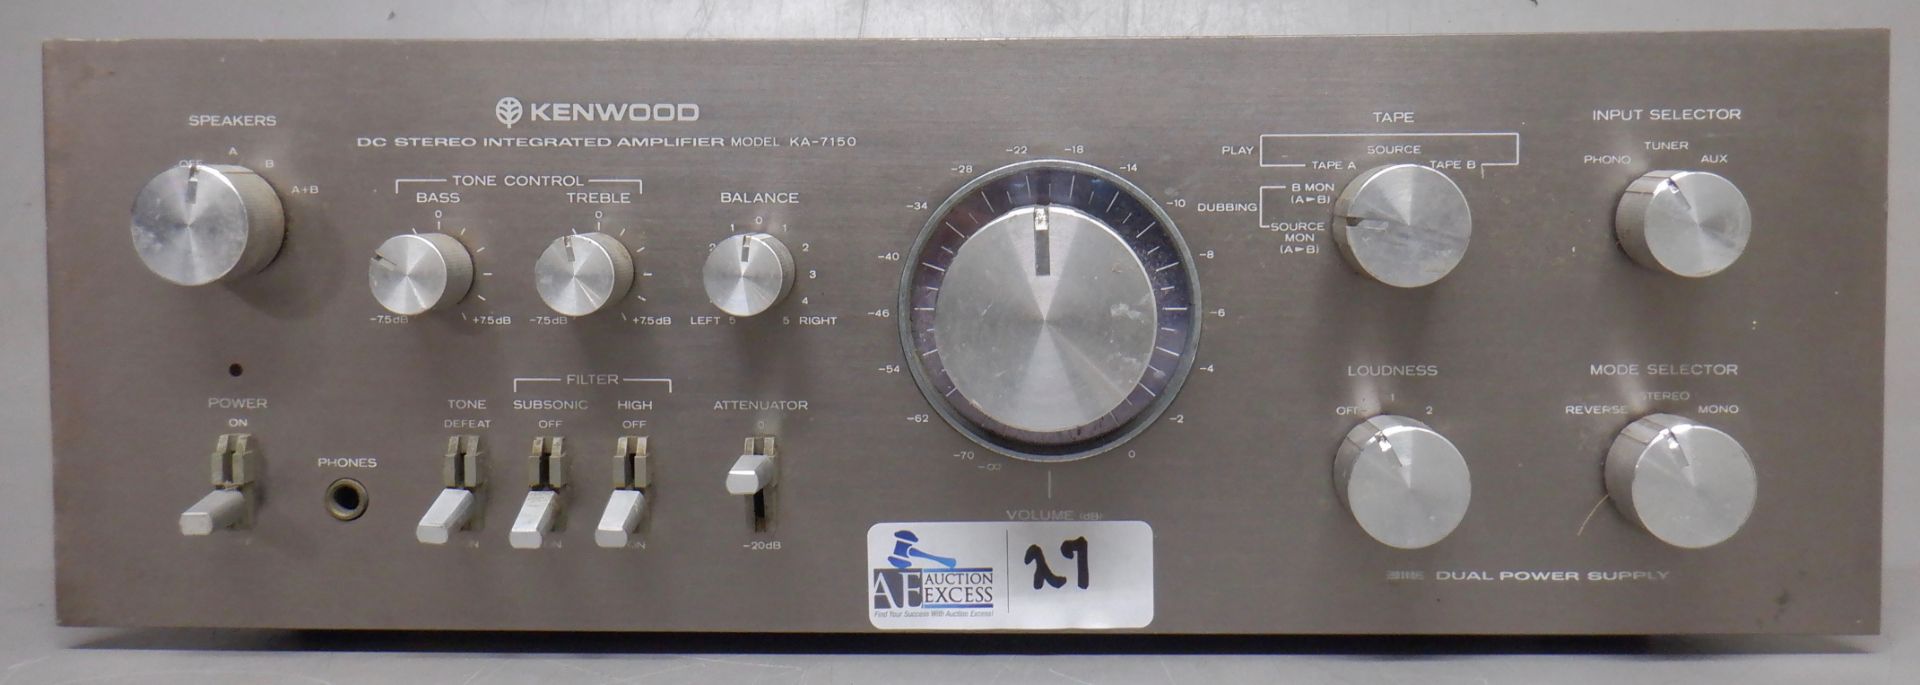 KENWOOD KA-7150 INTEGRATED AMP